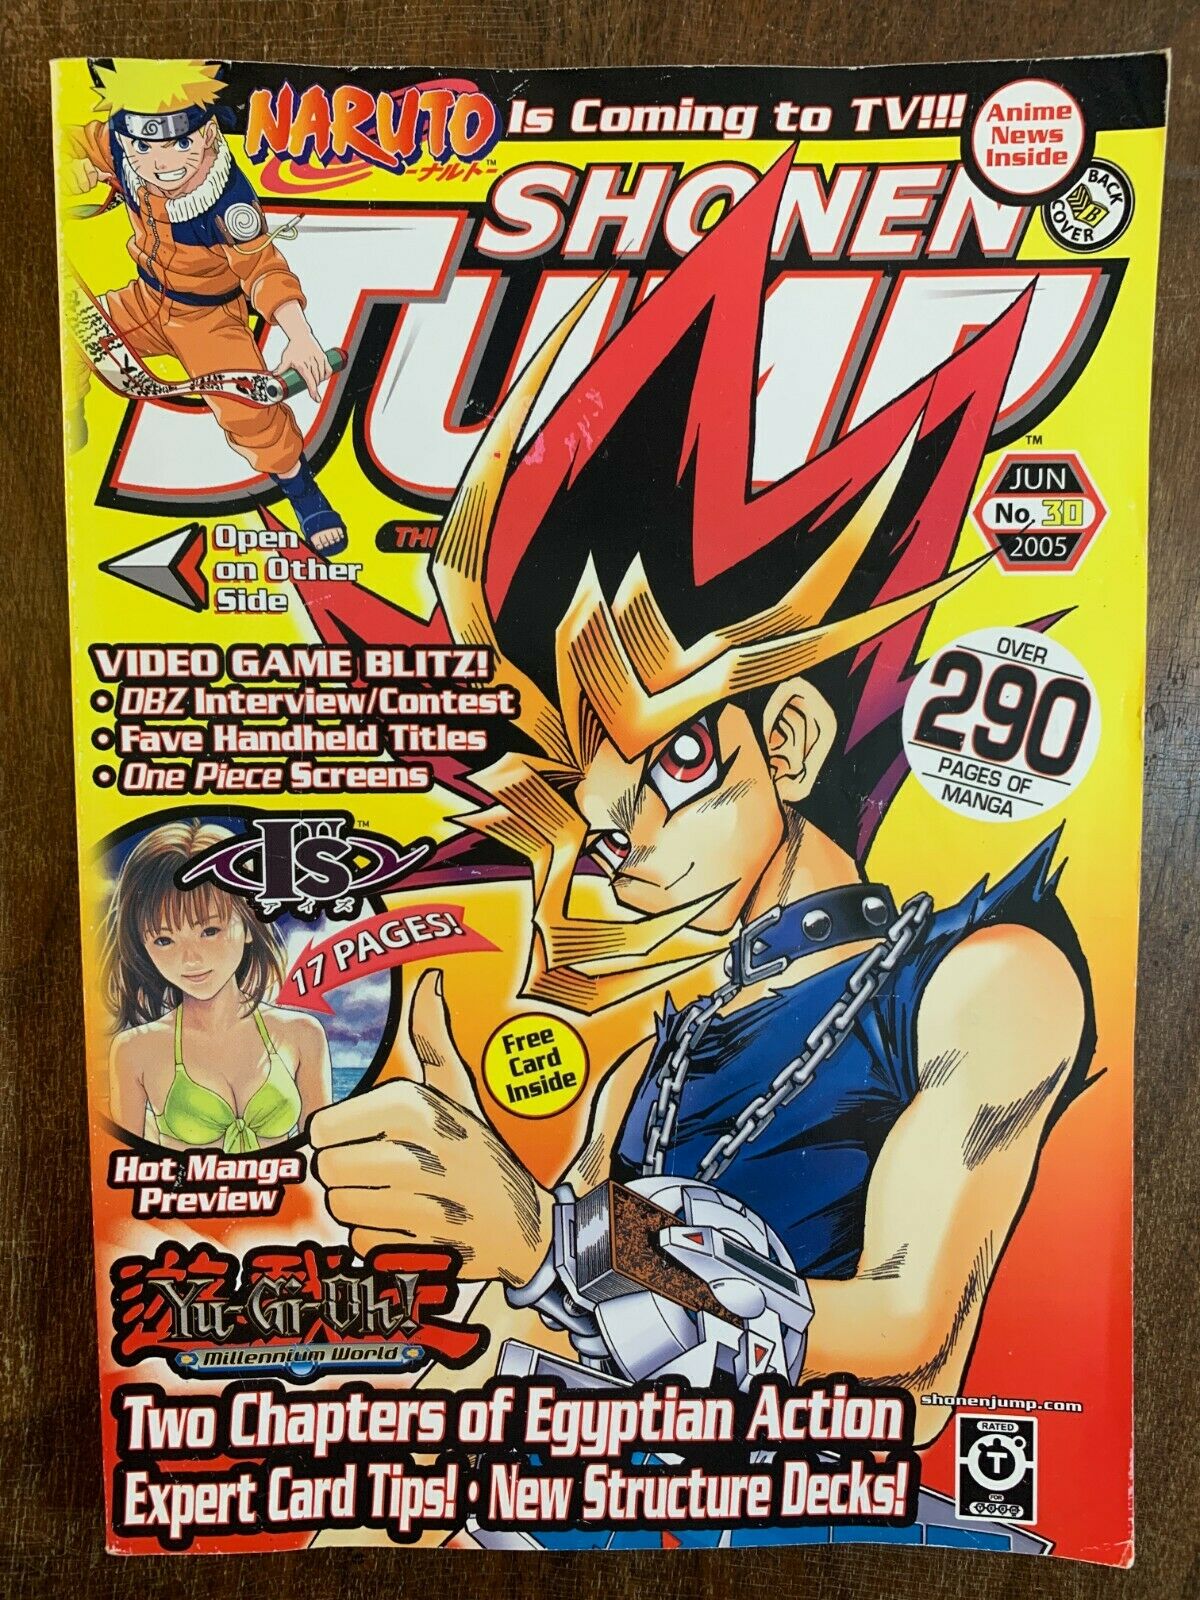 Shonen Jump Magna June 2005 Volume 3, Issue 6 Vol num. 30 Yu-Gi-Oh Hot Manga Pre